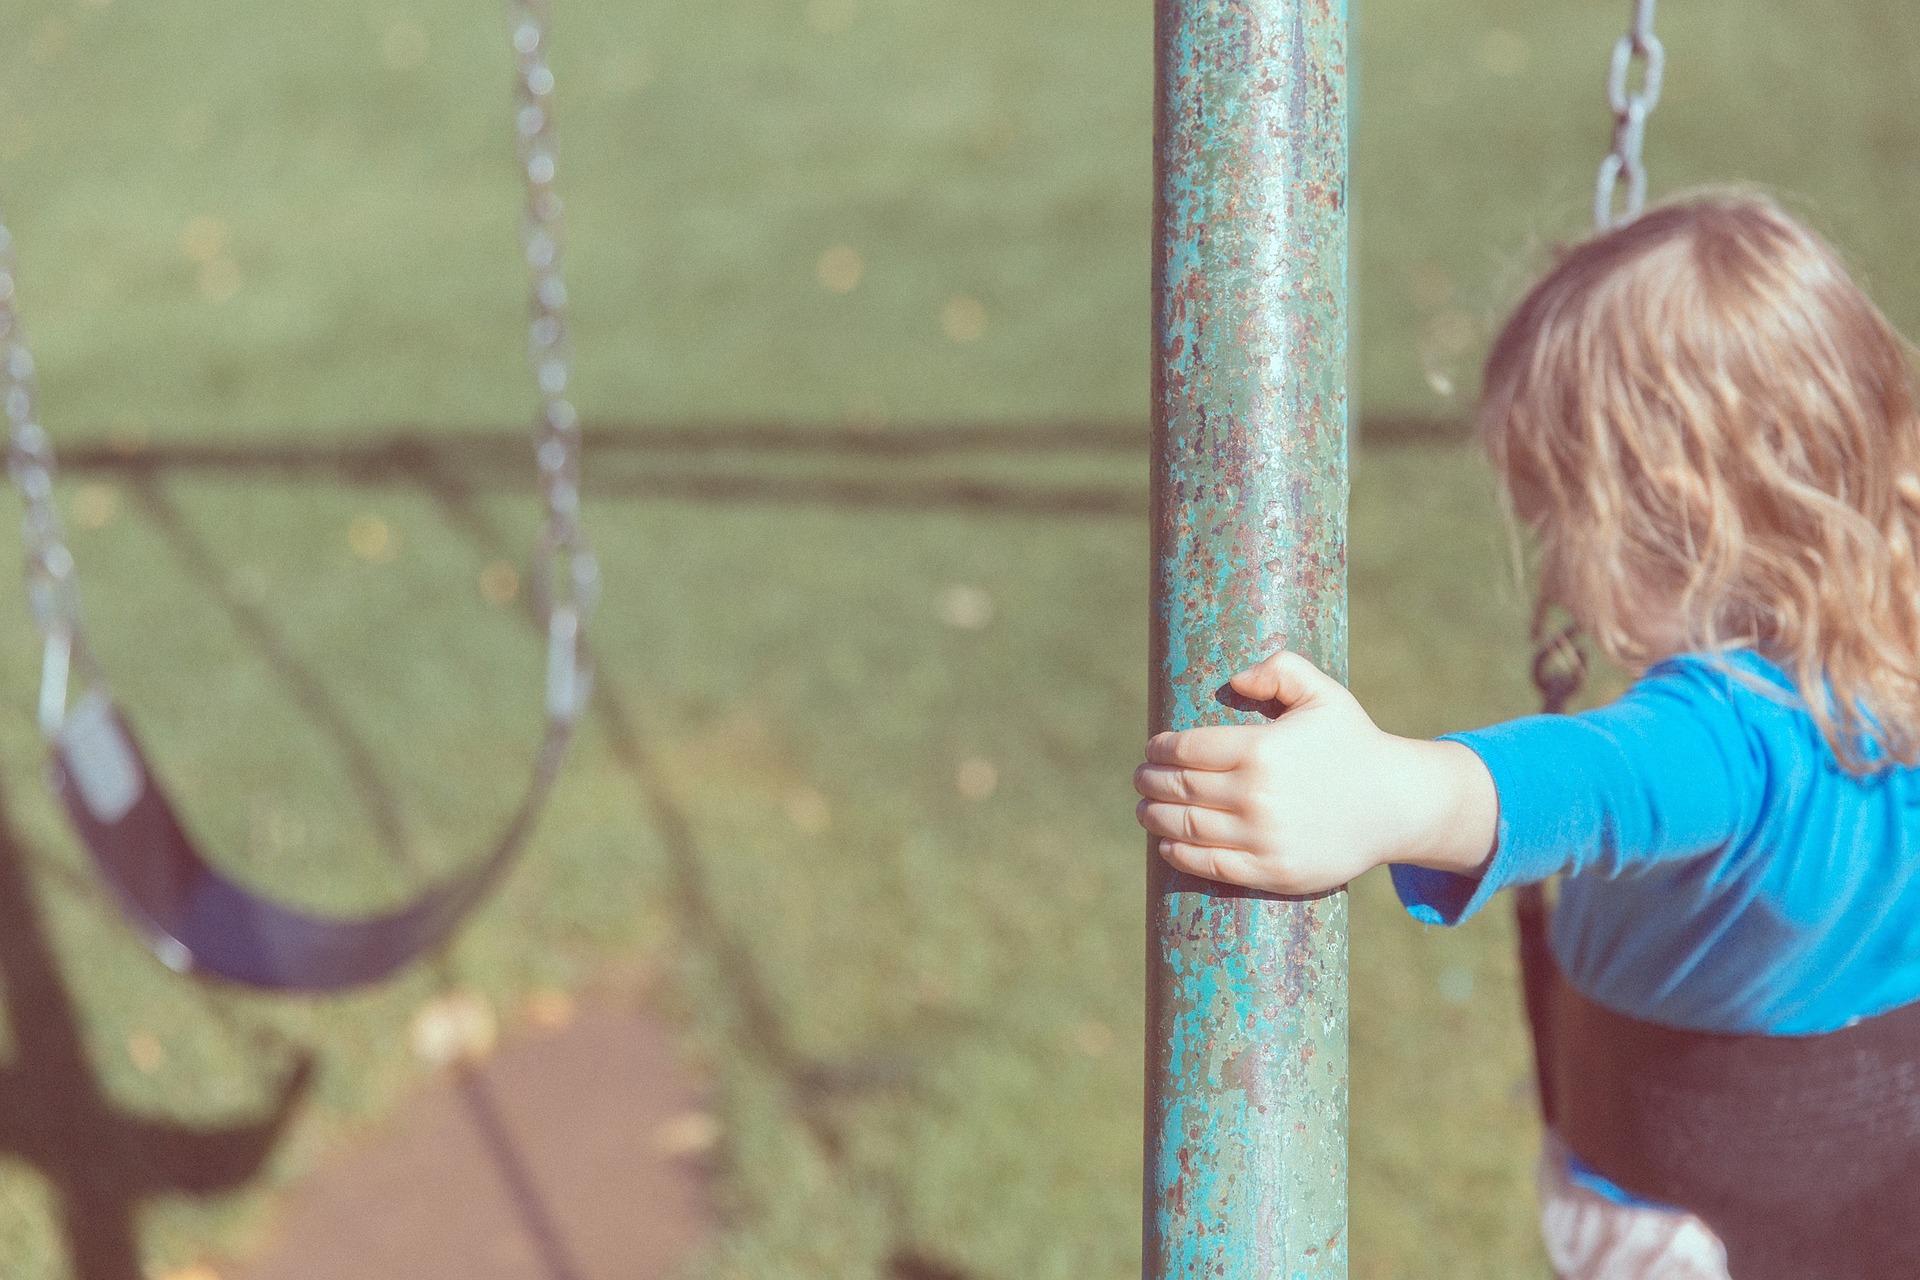 "swing, playground, people, kid, child" by "StockSnap" via Pixabay (CC0 Creative Commons)